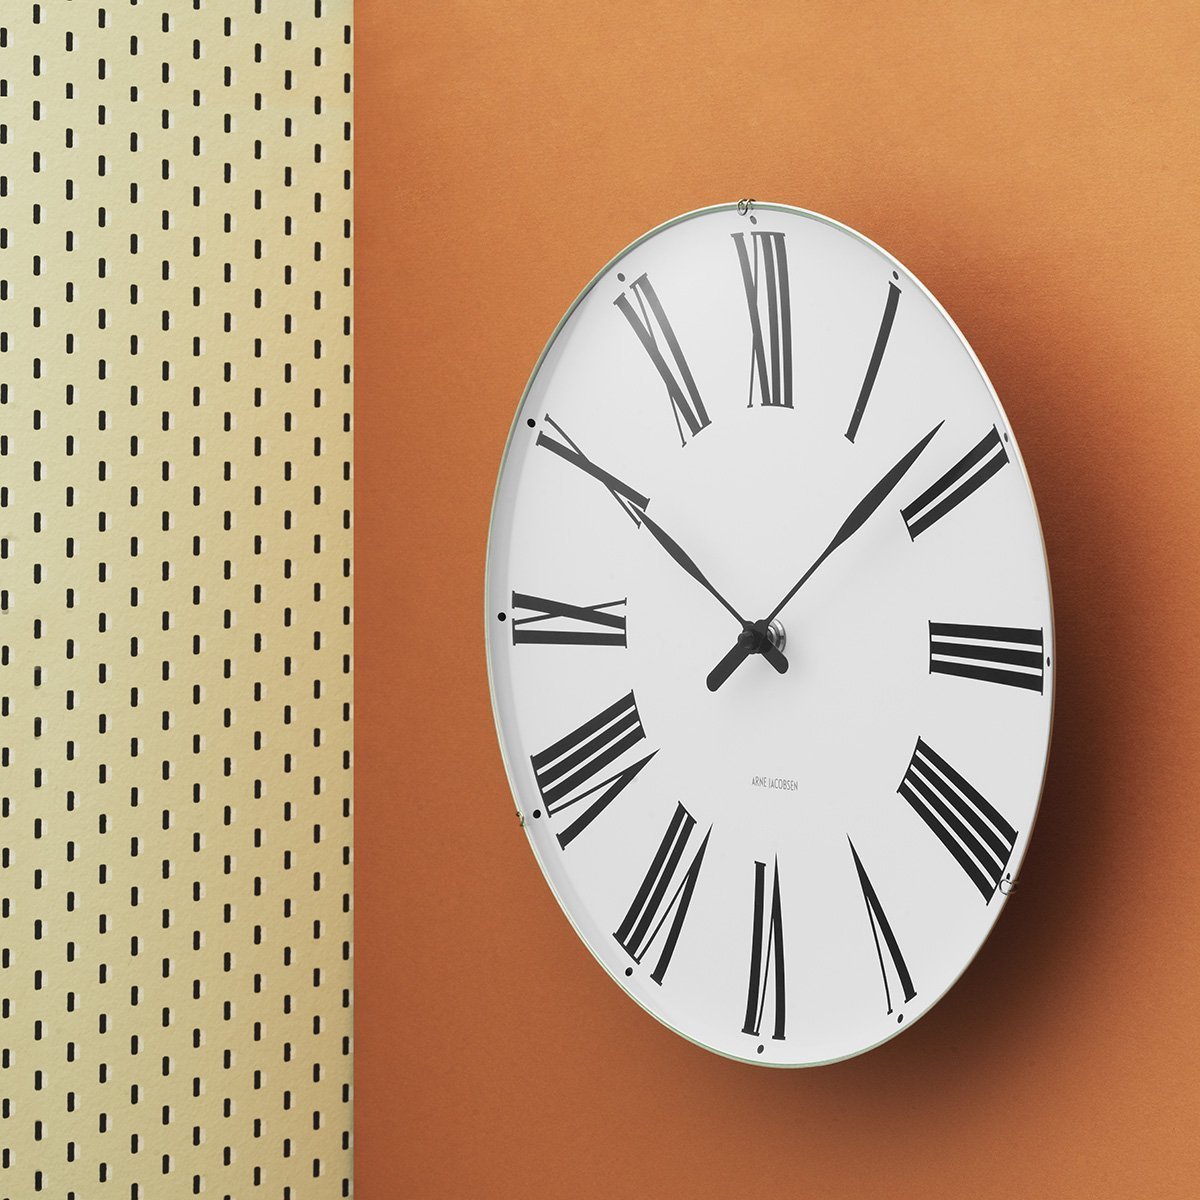 Arne Jacobsen Roman Wall Clock, 21cm